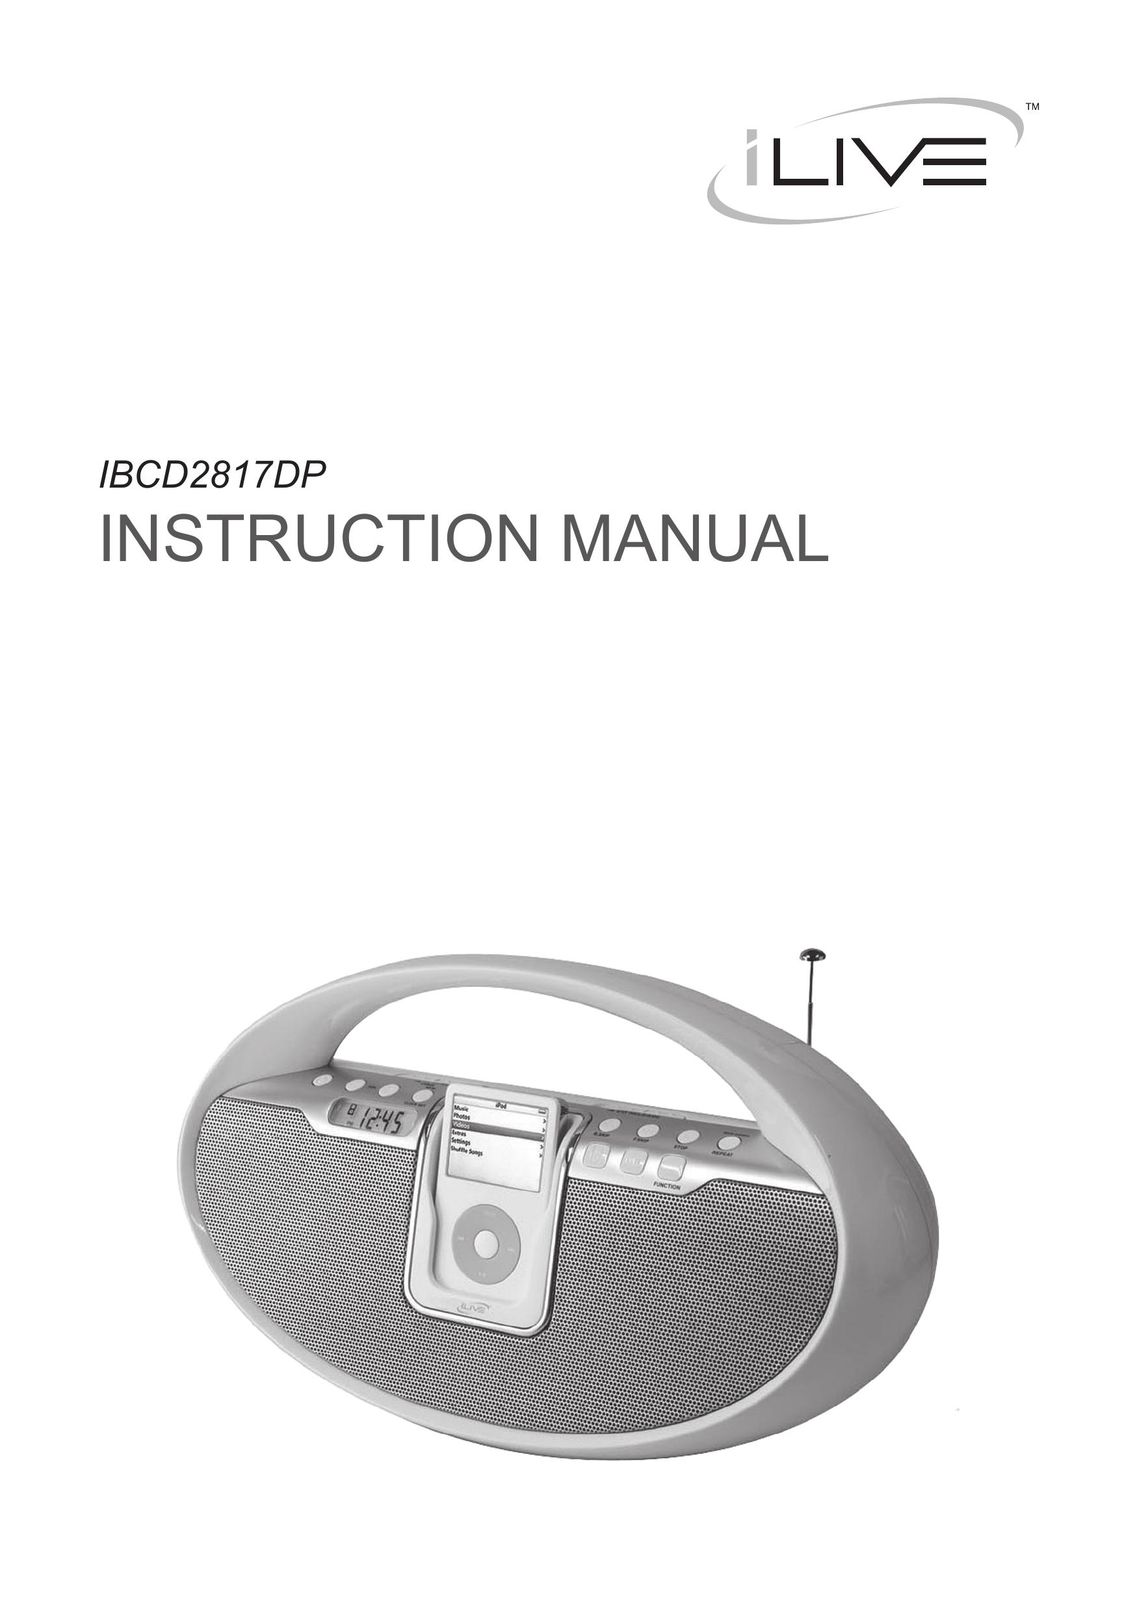 iLive IBCD2817DP MP3 Docking Station User Manual